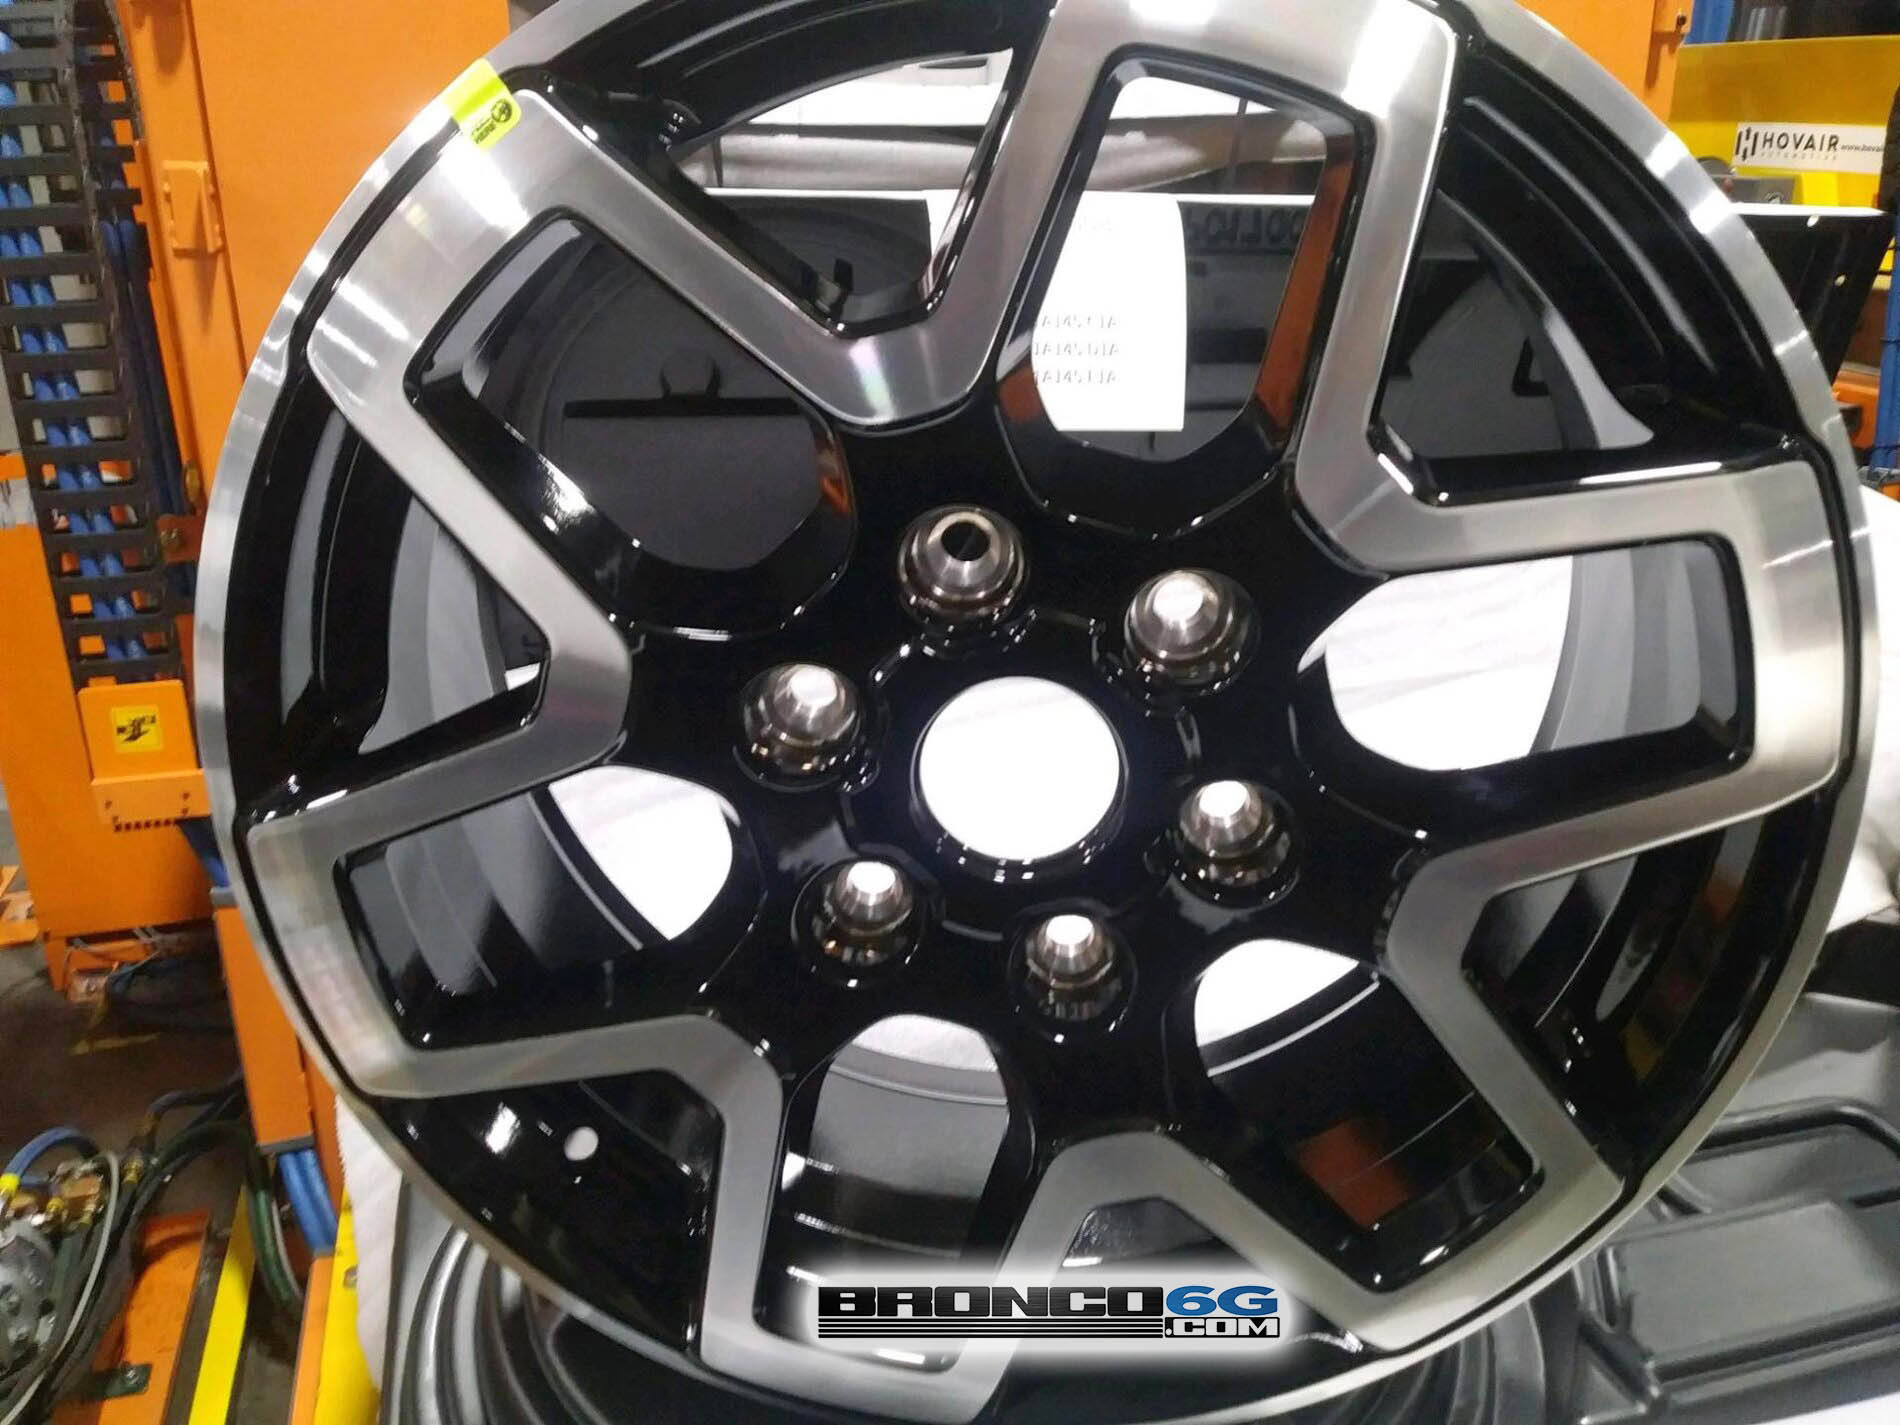 2021 Bronco - Factory Rims : Wheels Specs 11.jpg